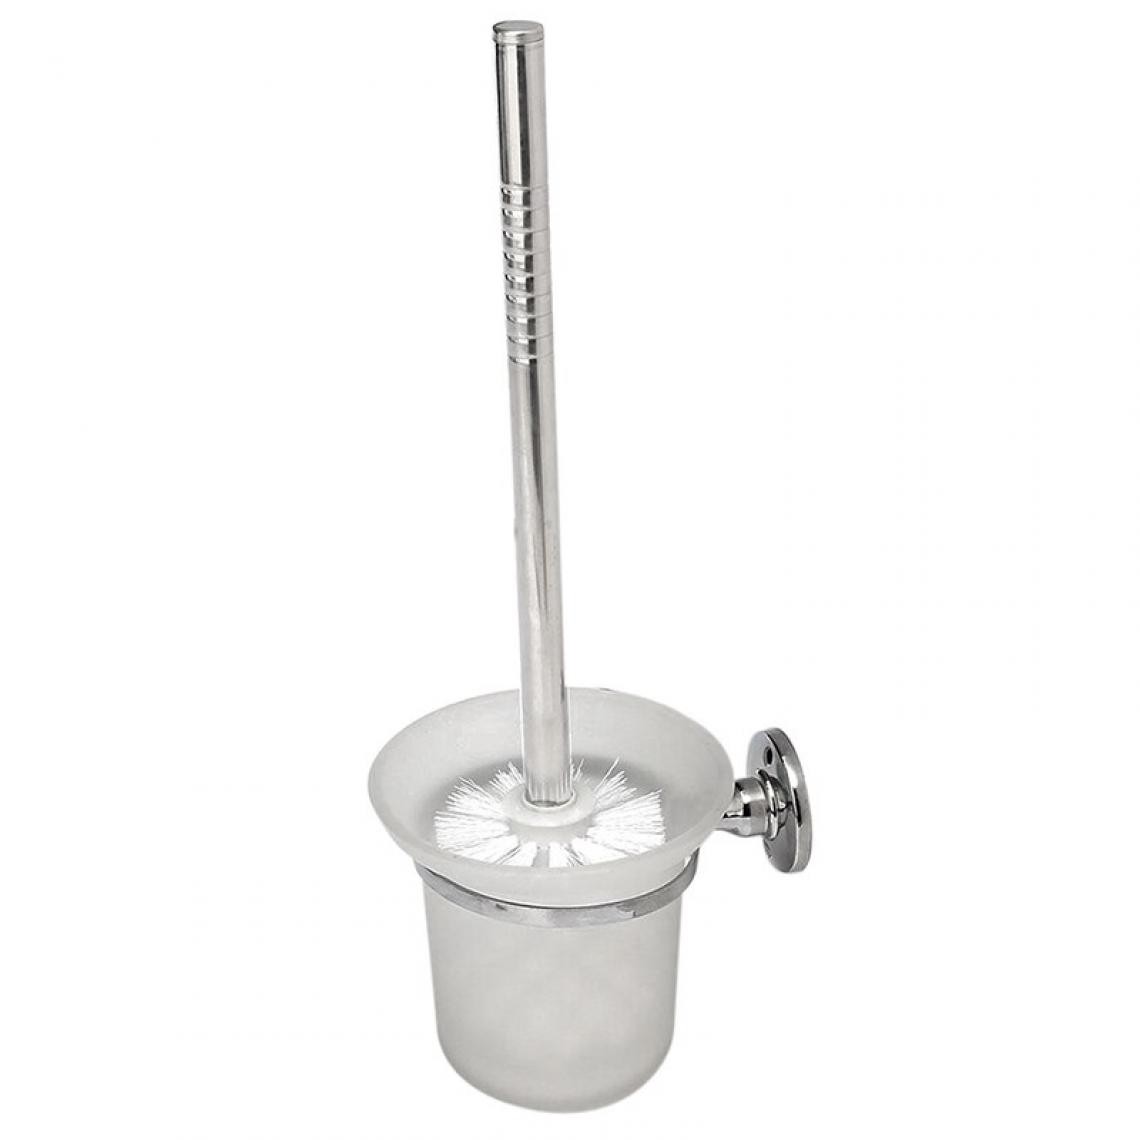 Universal - Porte-brosse de toilette en verre dépoli & 124 ; Porte-brosse de toilette(blanche) - Accessoires de salle de bain